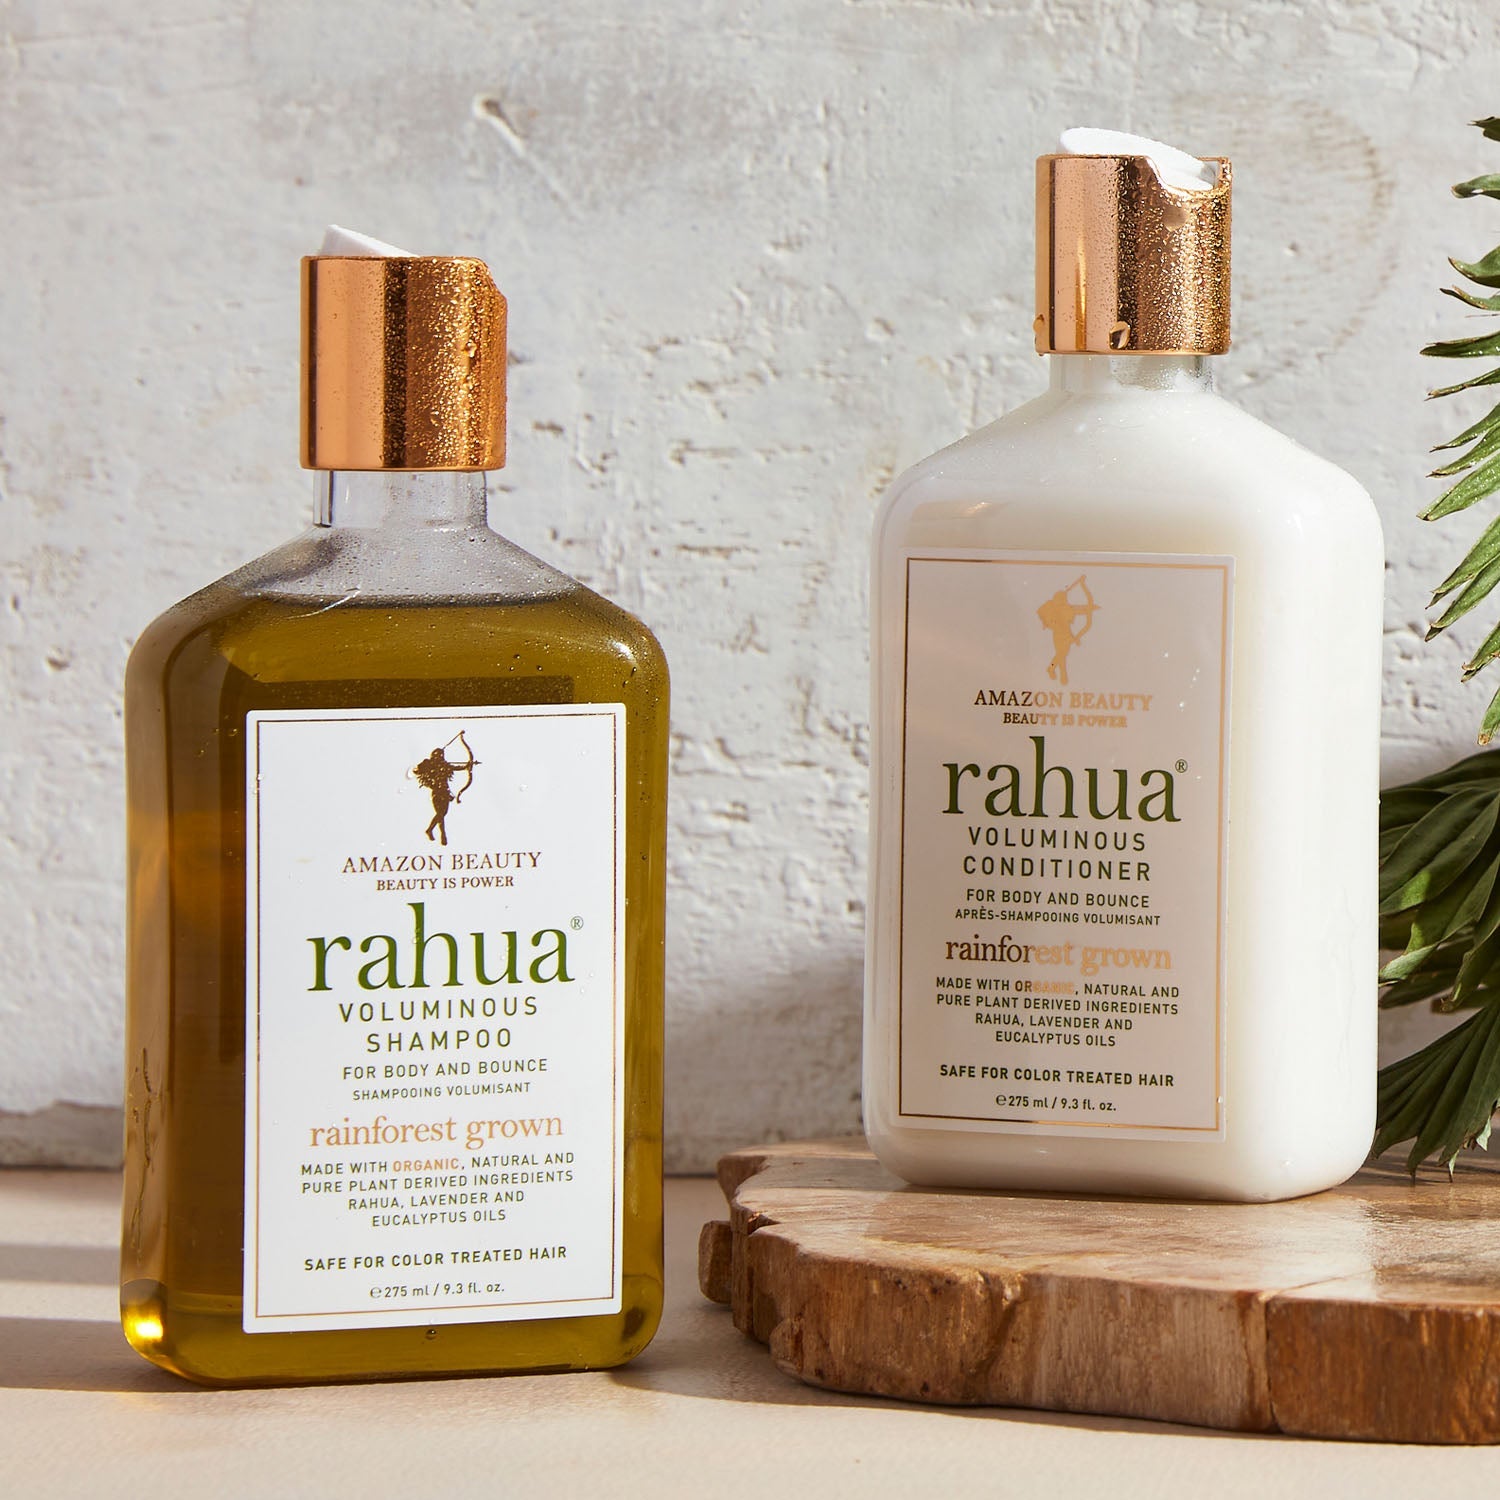 Rahua Voluminous Shampoo and Conditioner Duo Full Size Bottles